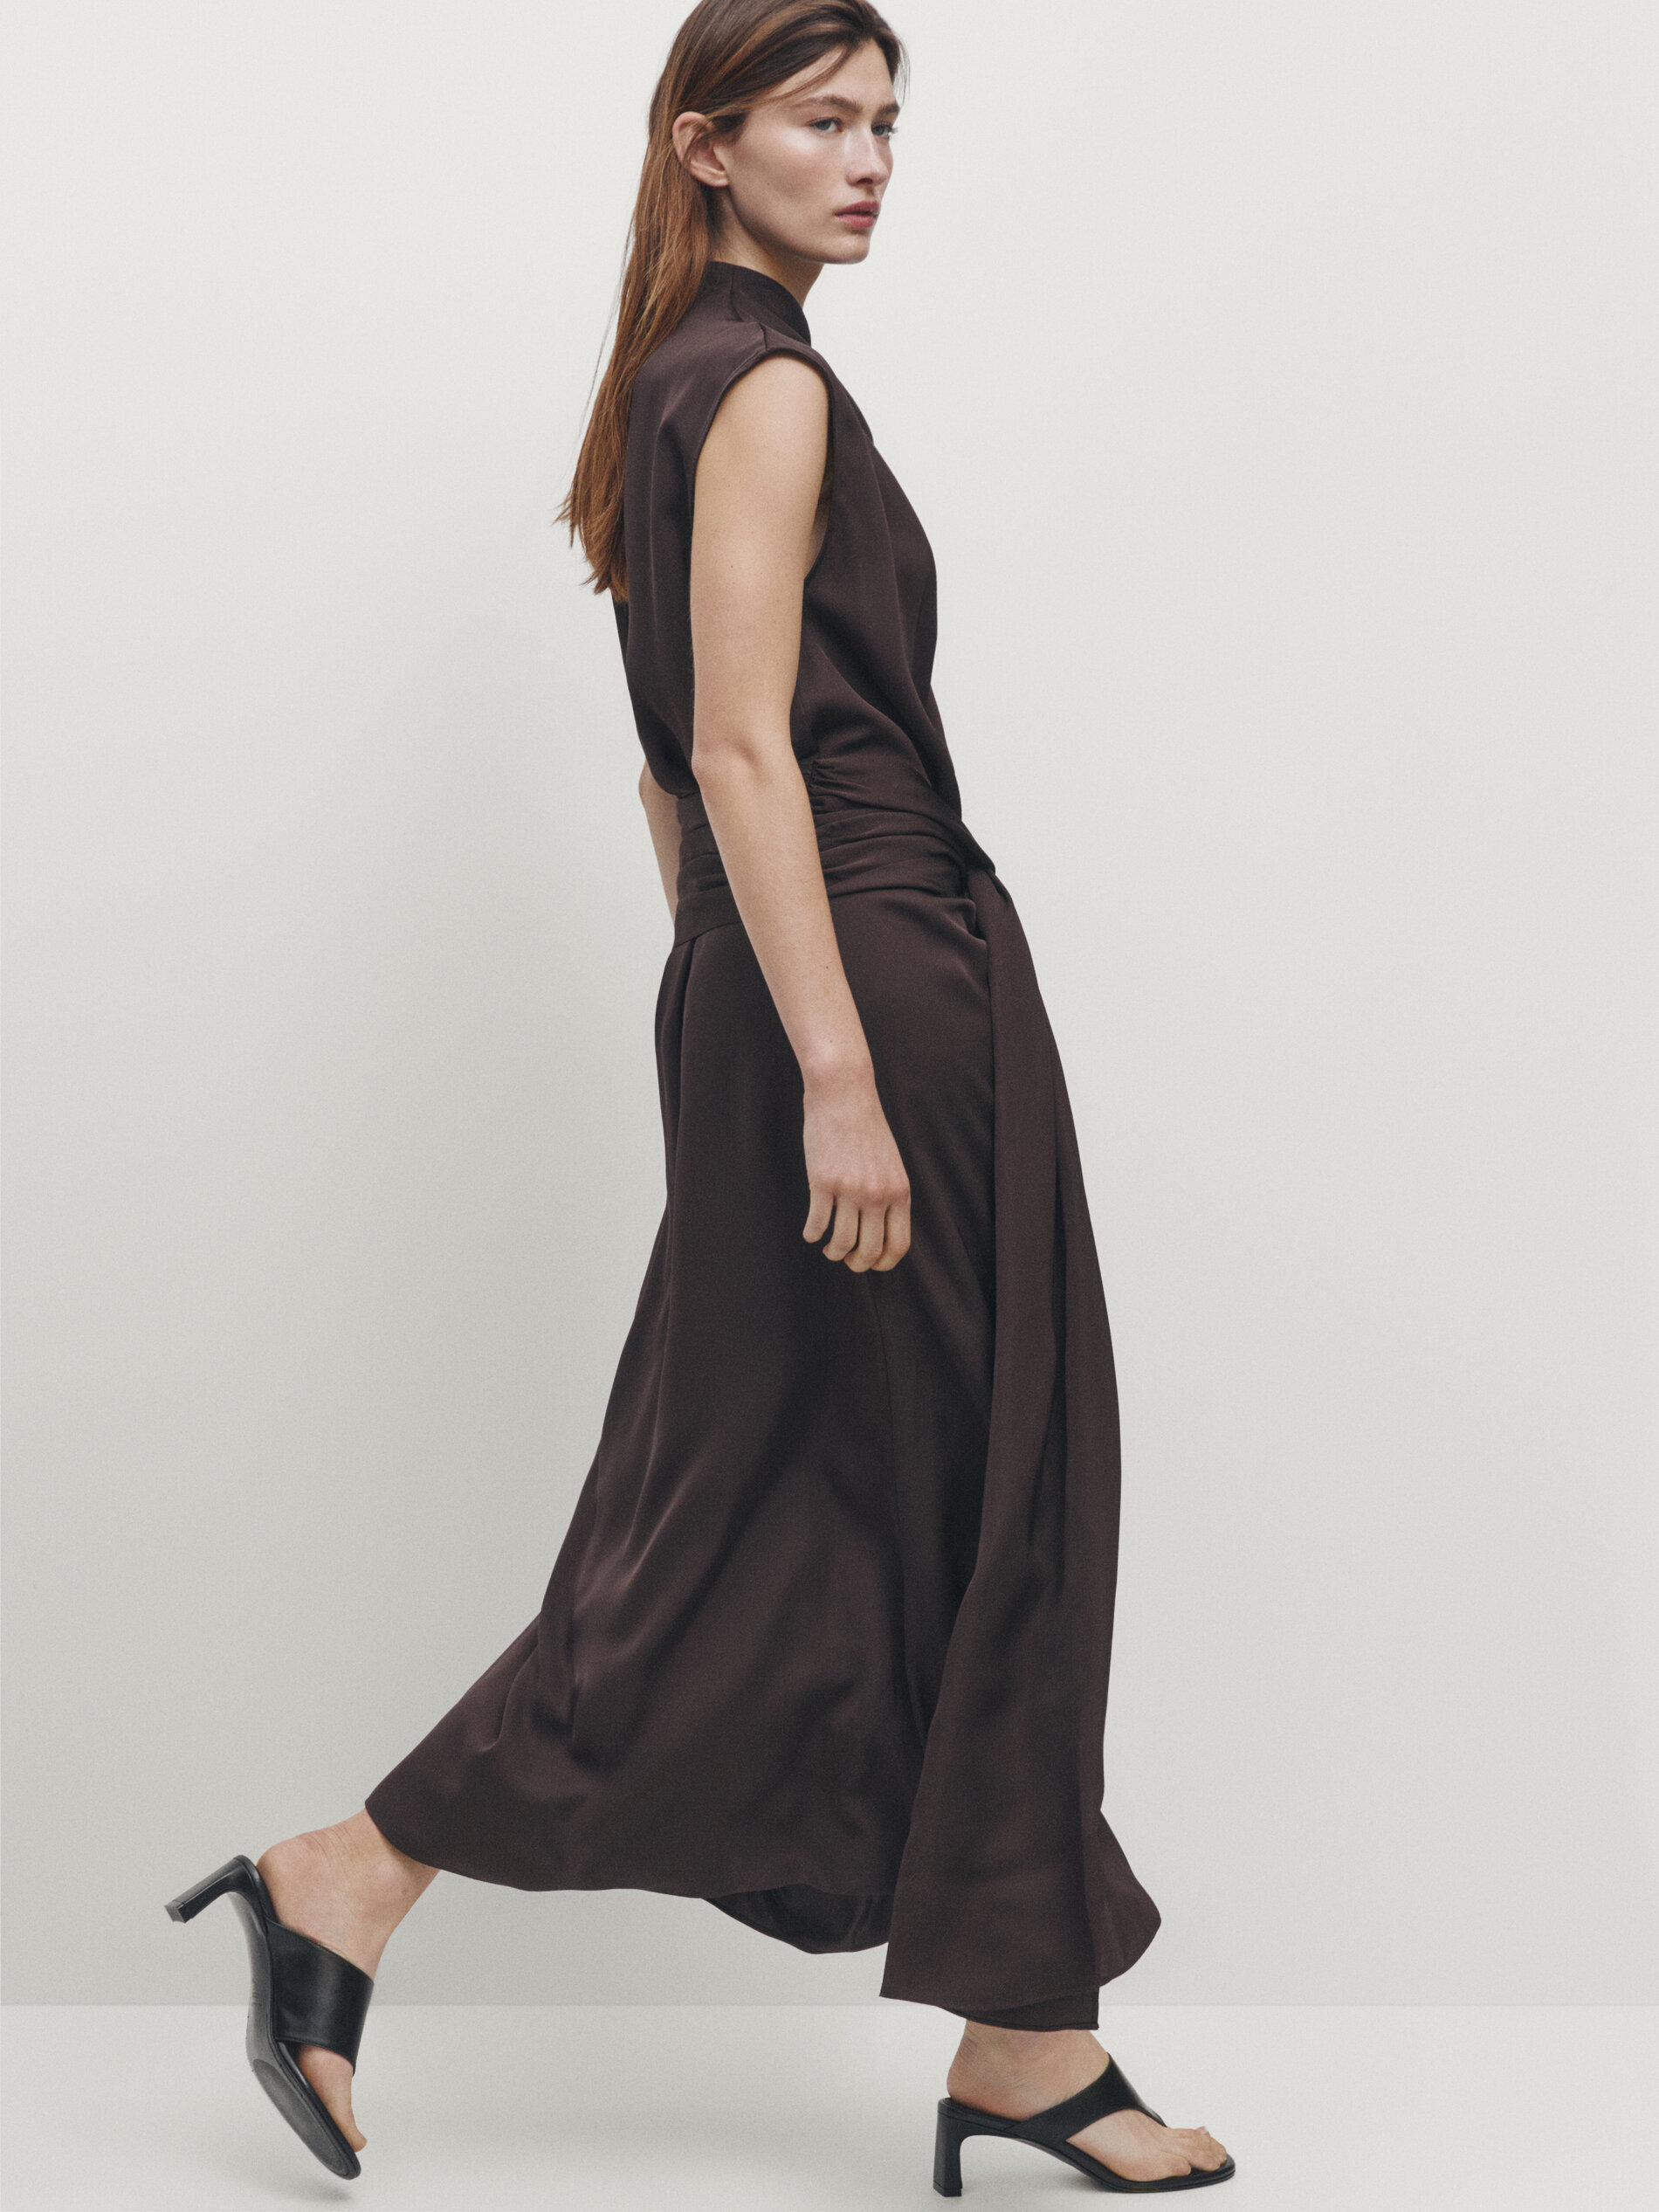 Massimo Dutti Asymmetrical Satin Dress With Lace In Schokoladenbraun